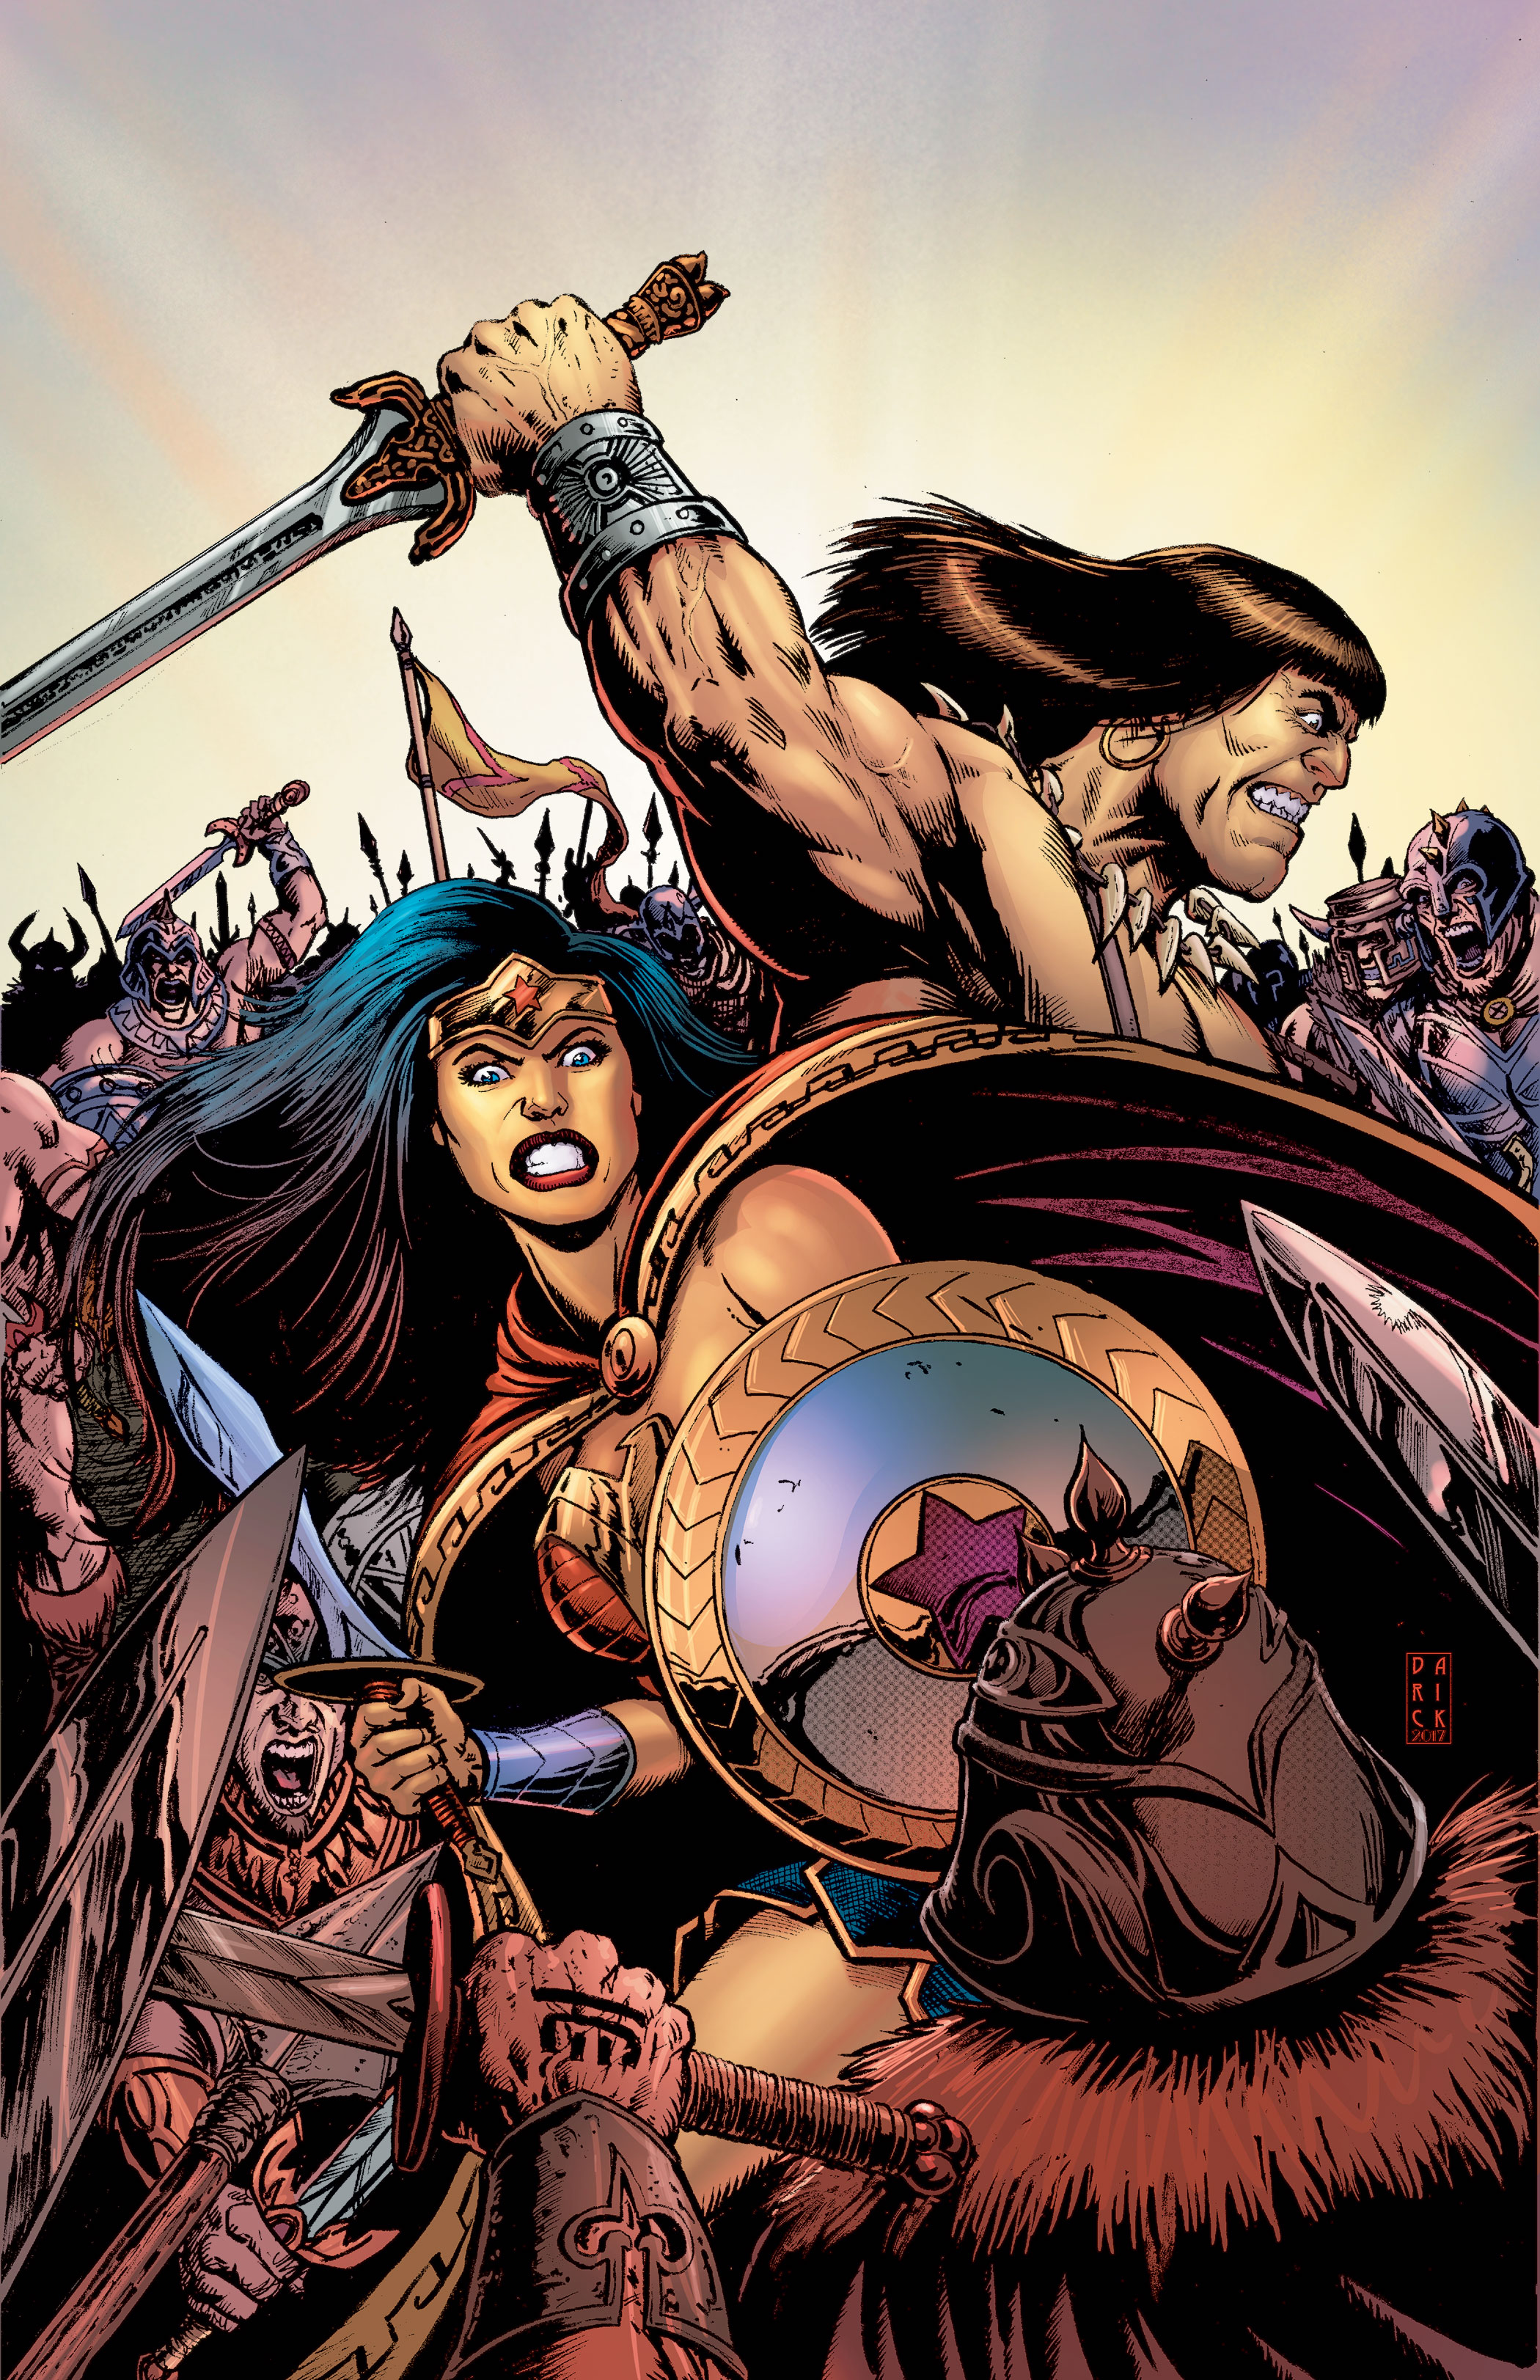 Legends Collide in New Wonder Woman/Conan Crossover